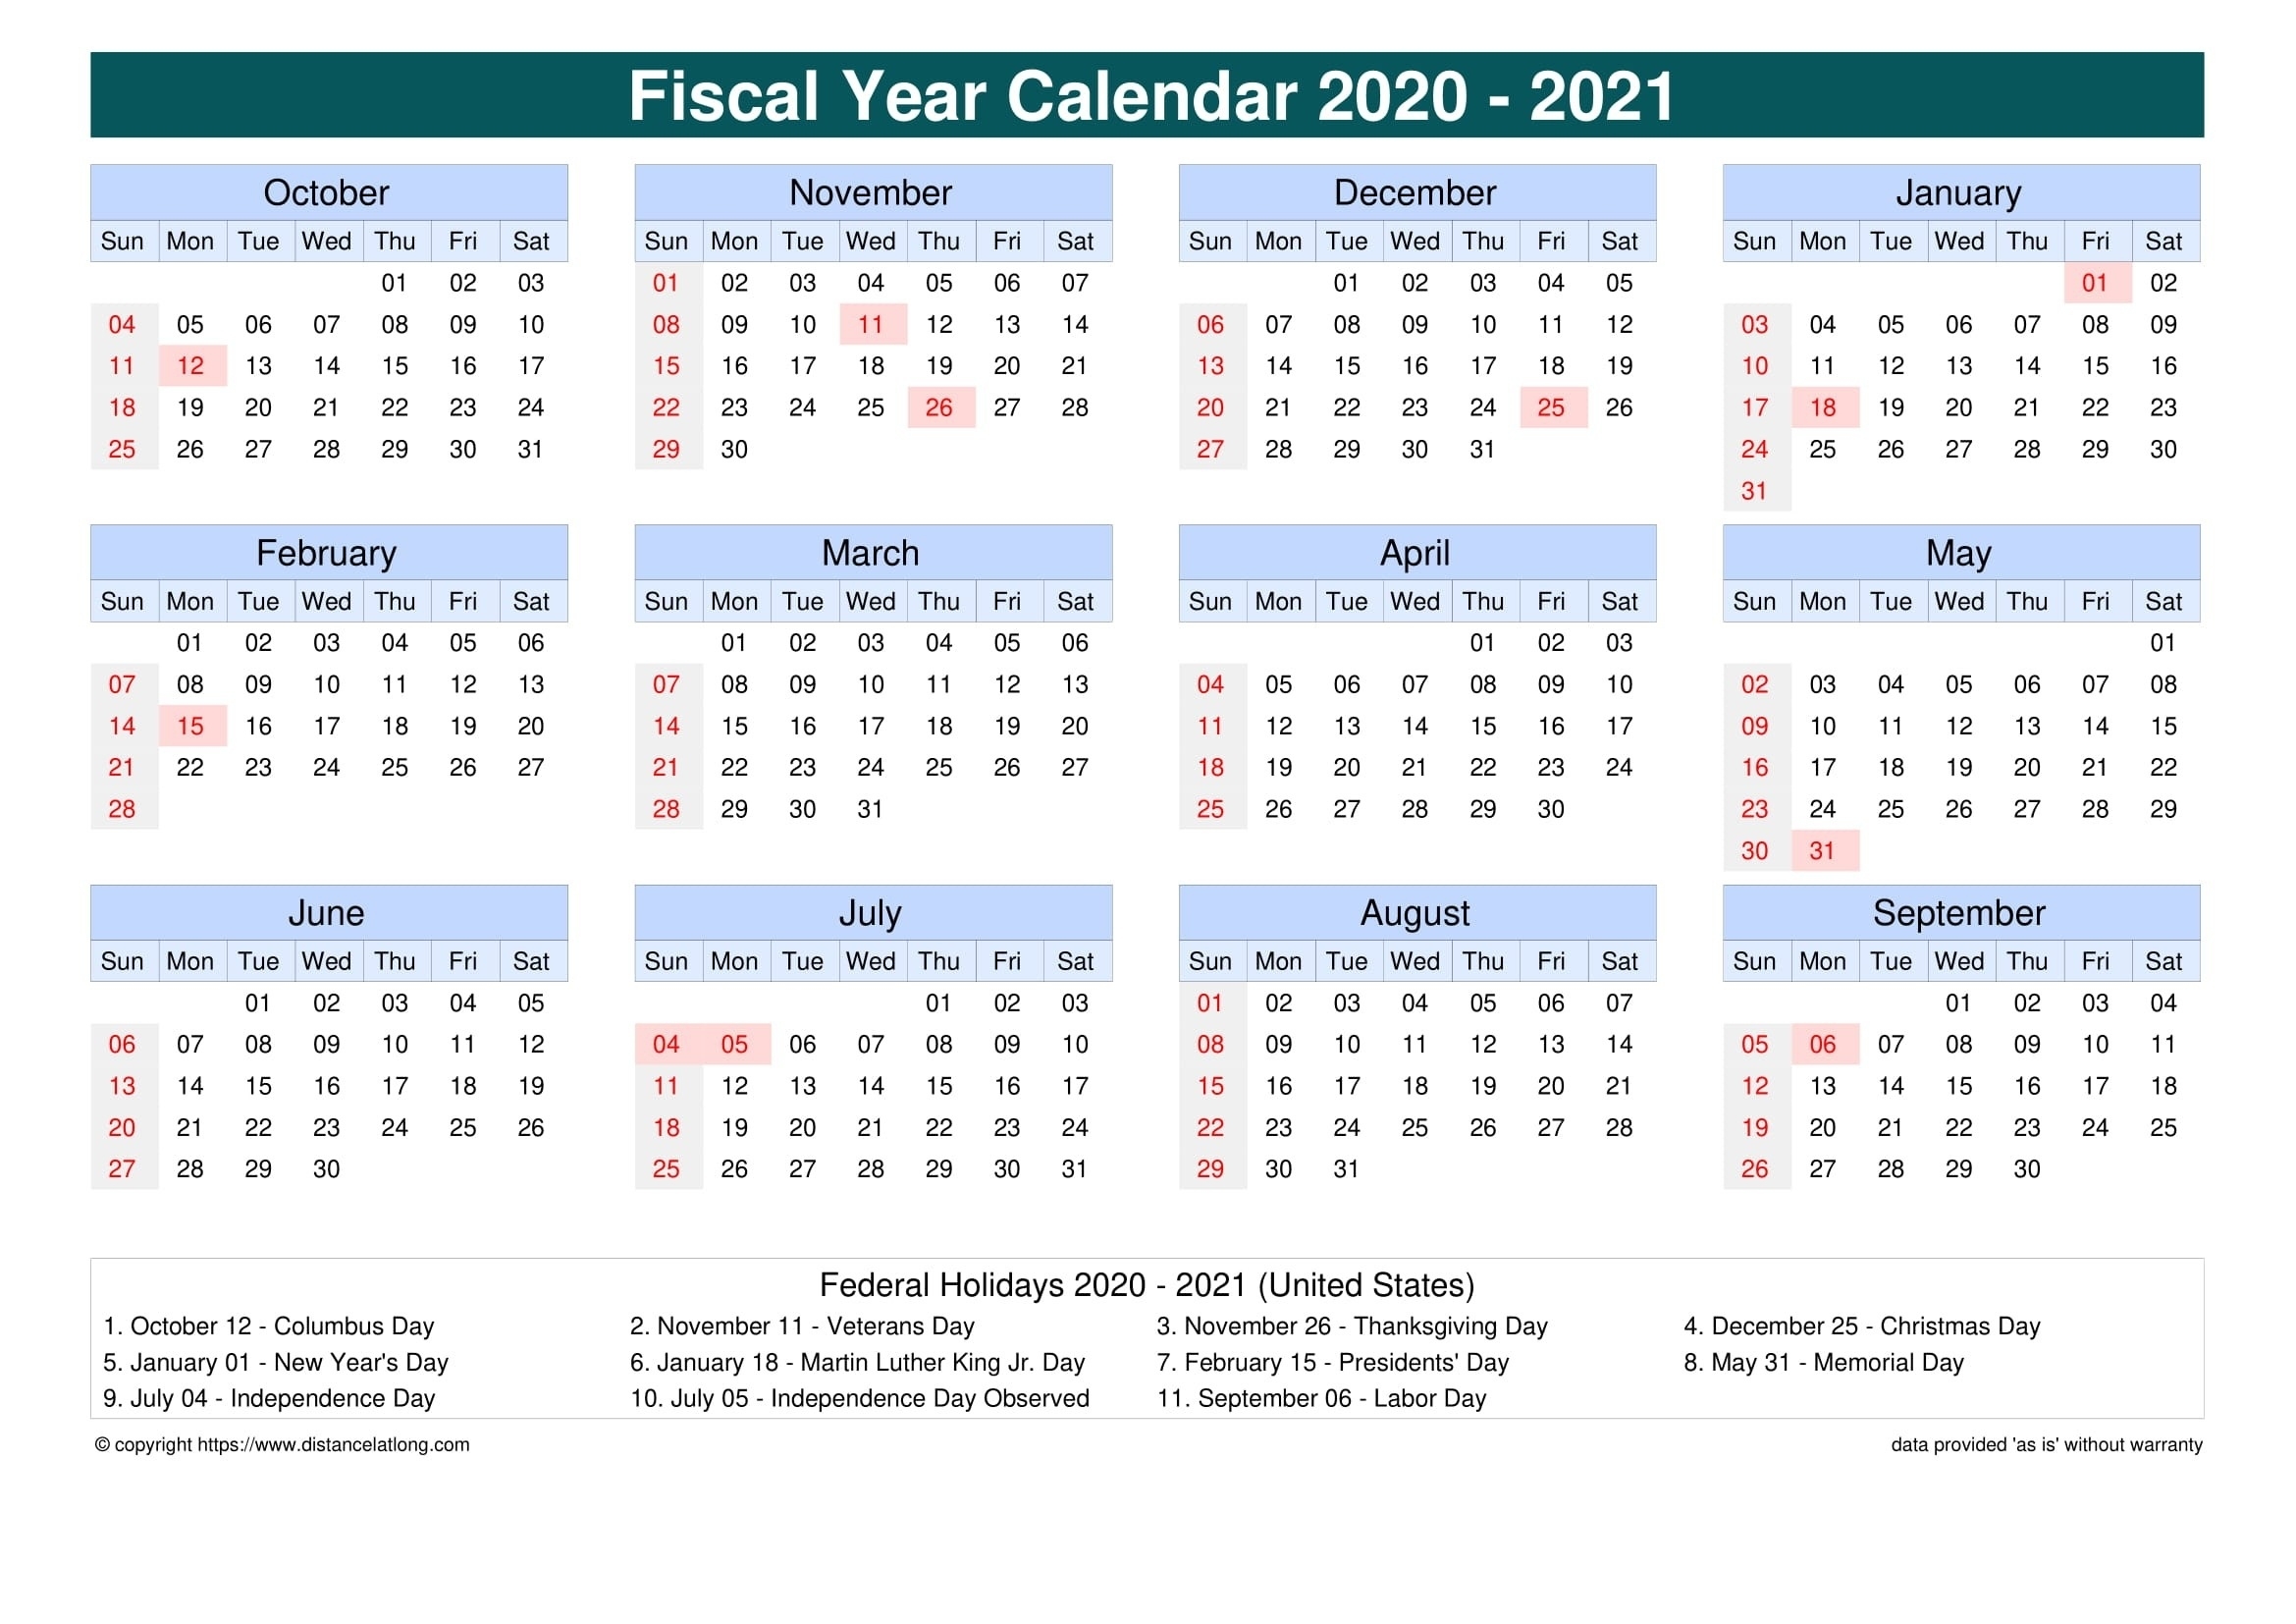 Financial Year Calendar 2021 19 Australia - Template Calendar Design June 2021 Calendar Australia